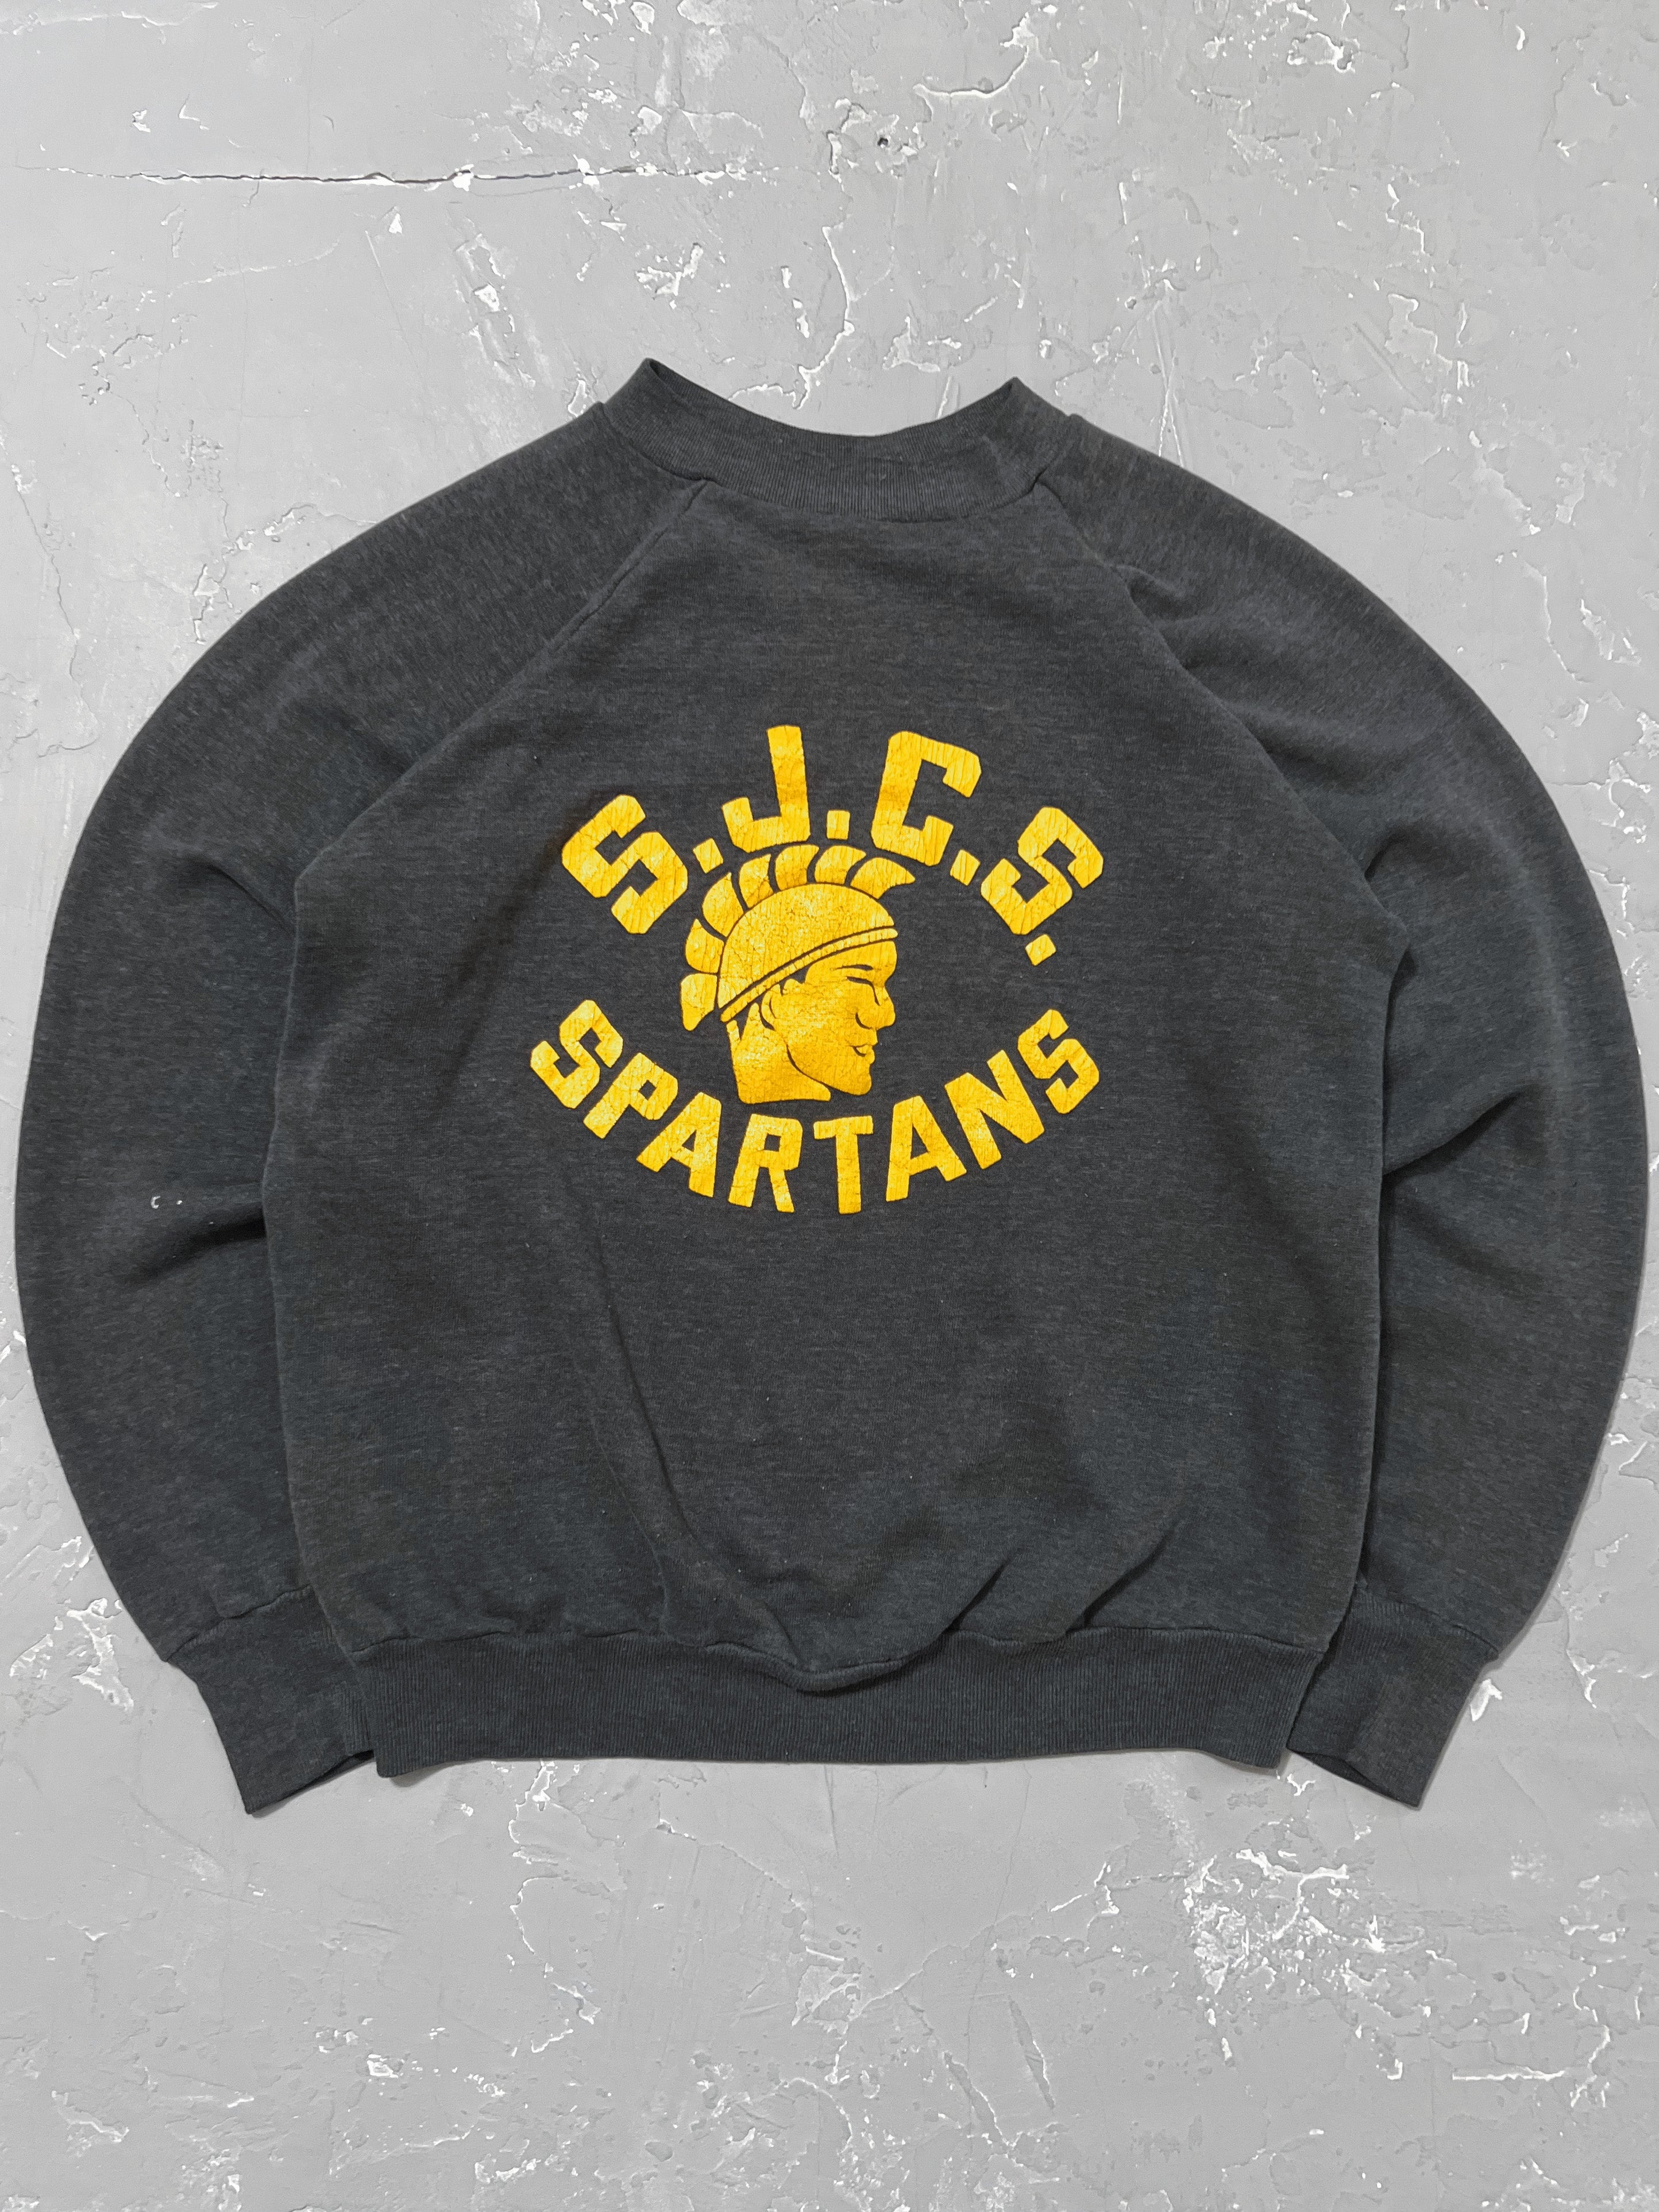 1980s S.J.C.S. Spartans Raglan Sweatshirt [M]